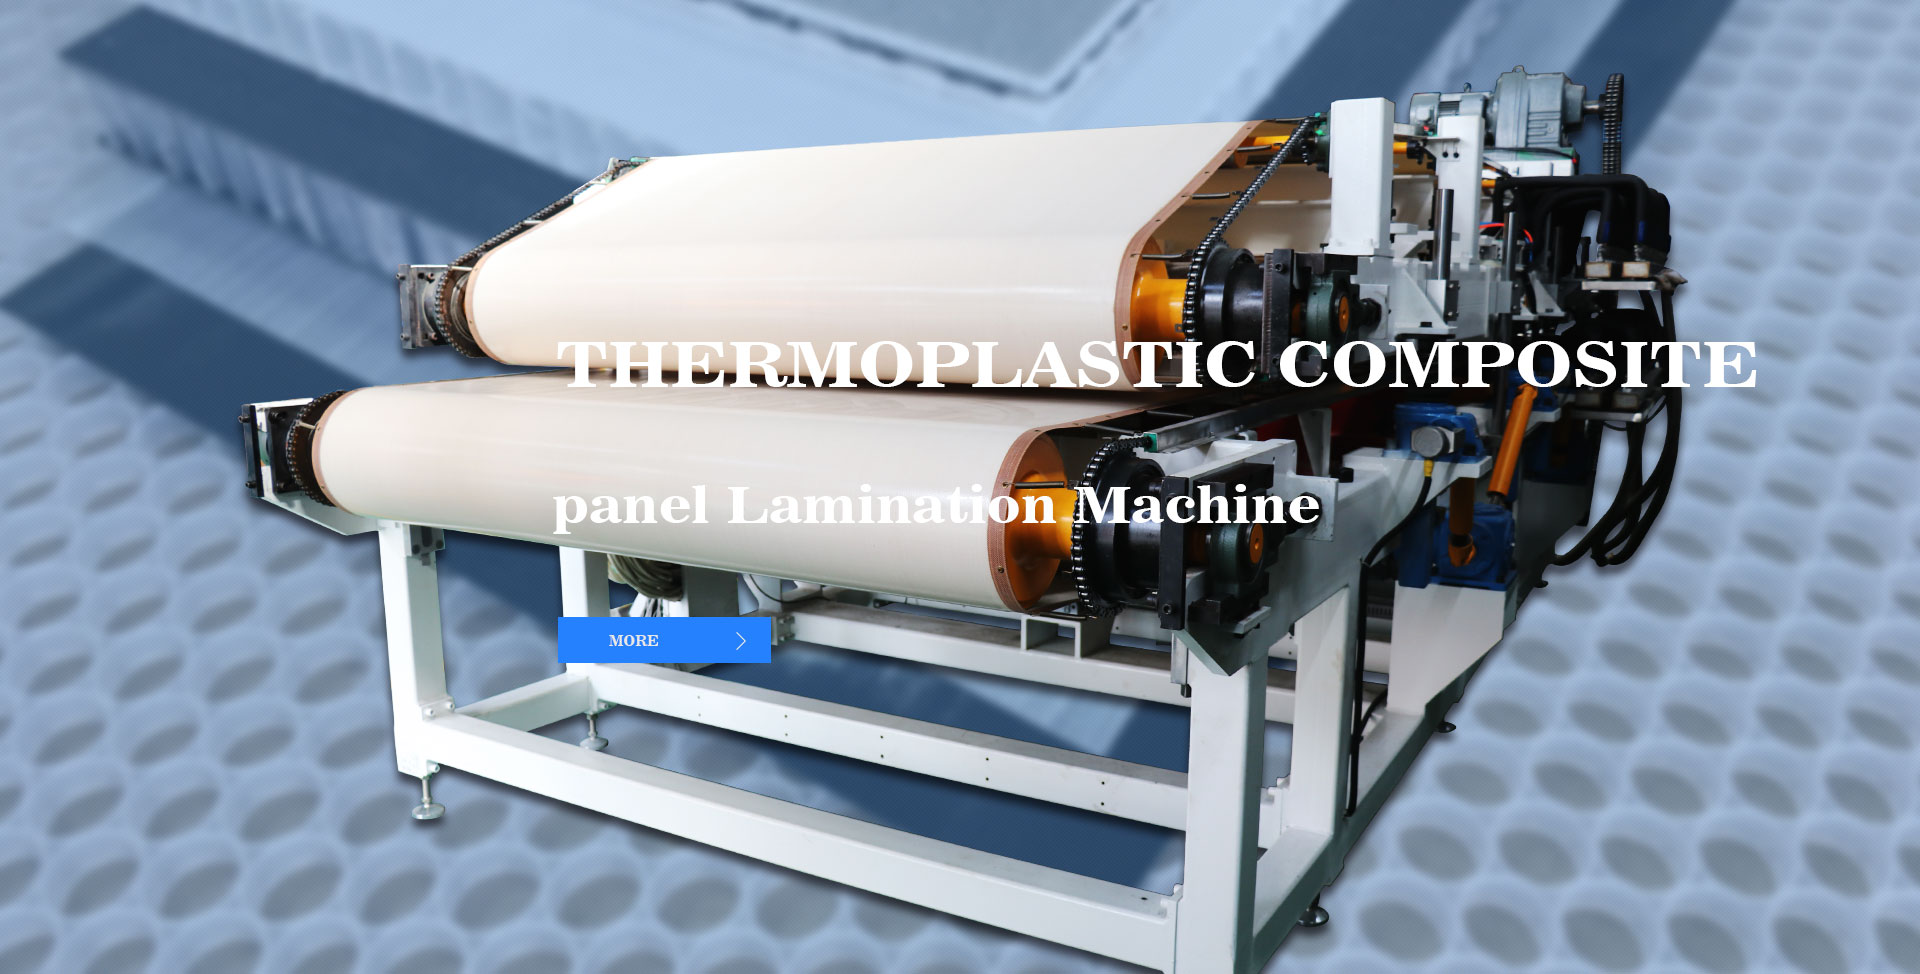 Thermoplastic composite panel Lamination Machine